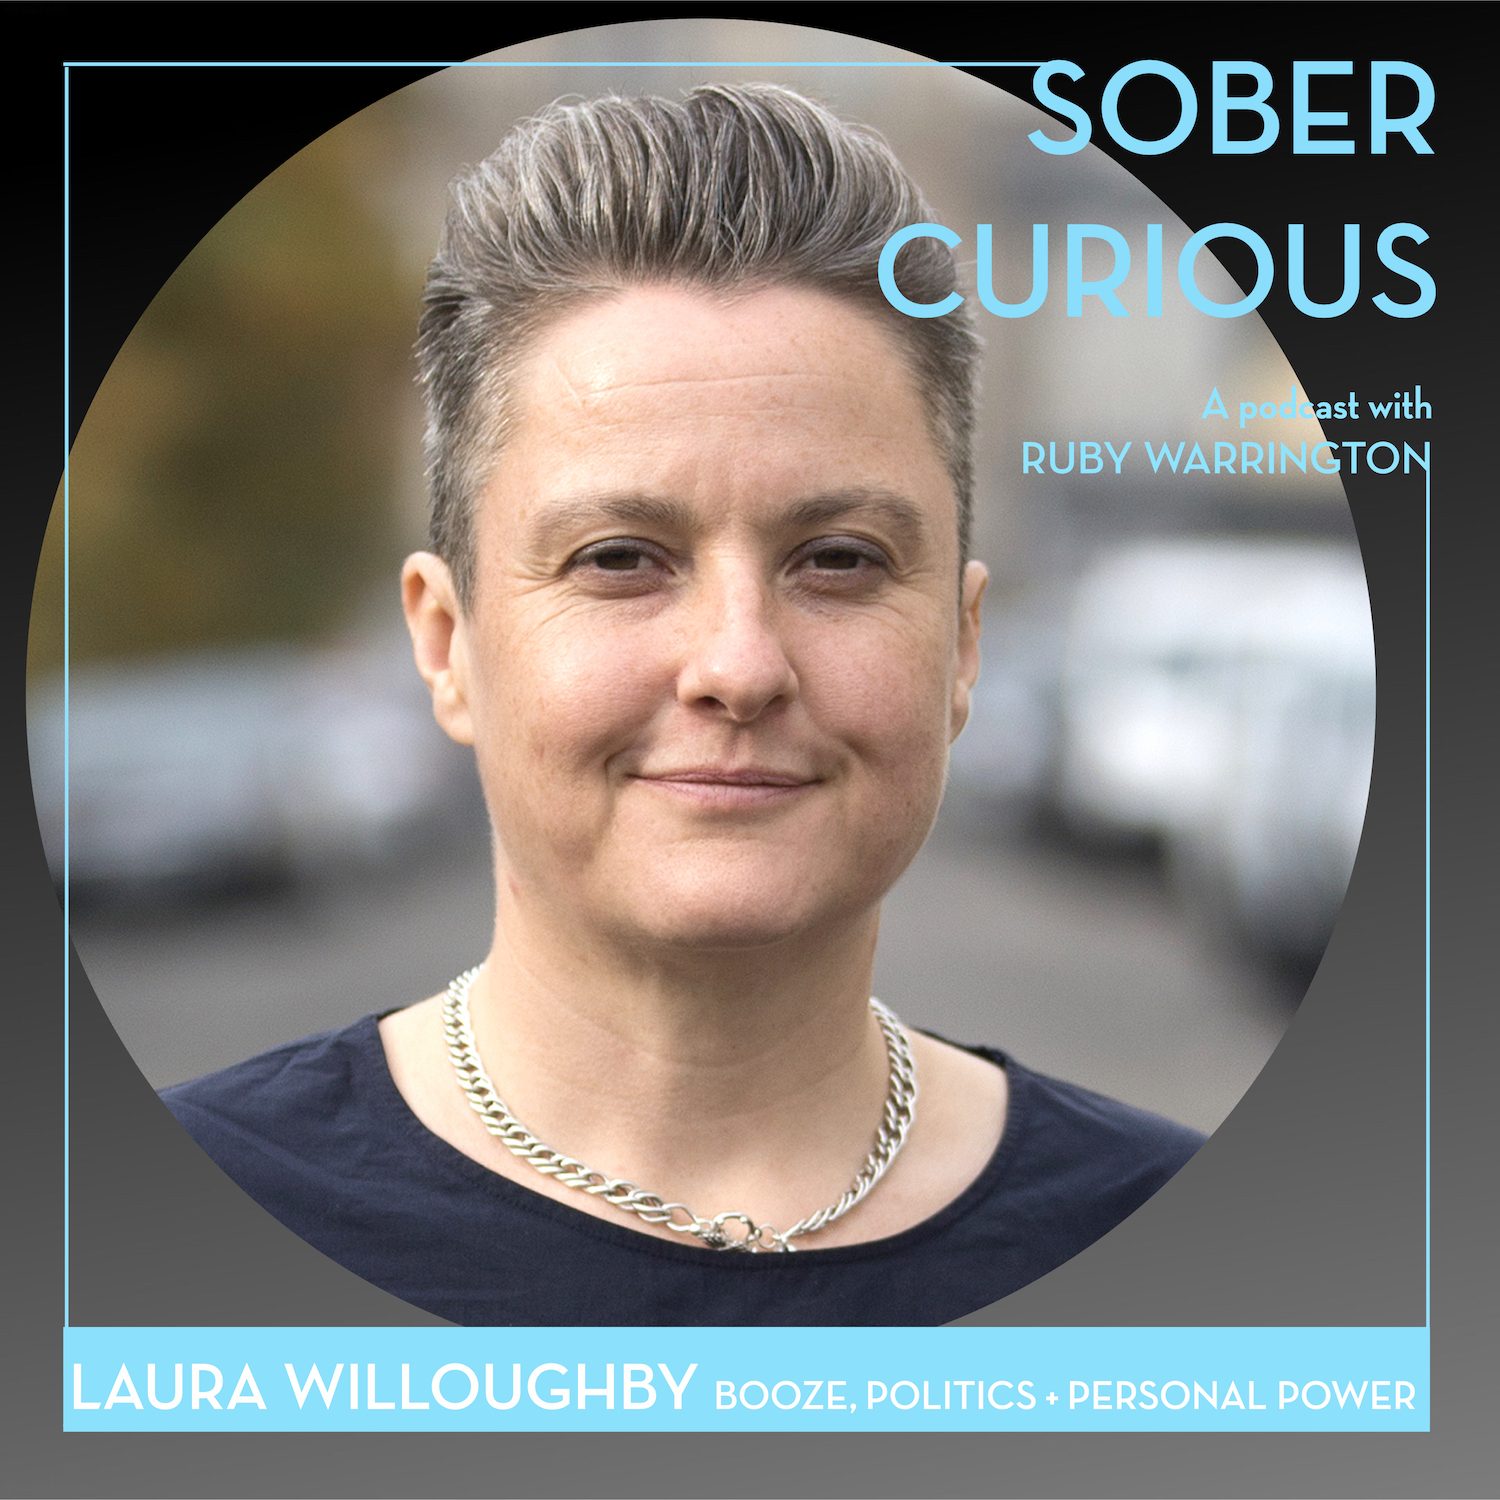 Laura Willoughby Sober Curious podcast Club Soda Ruby Warrington